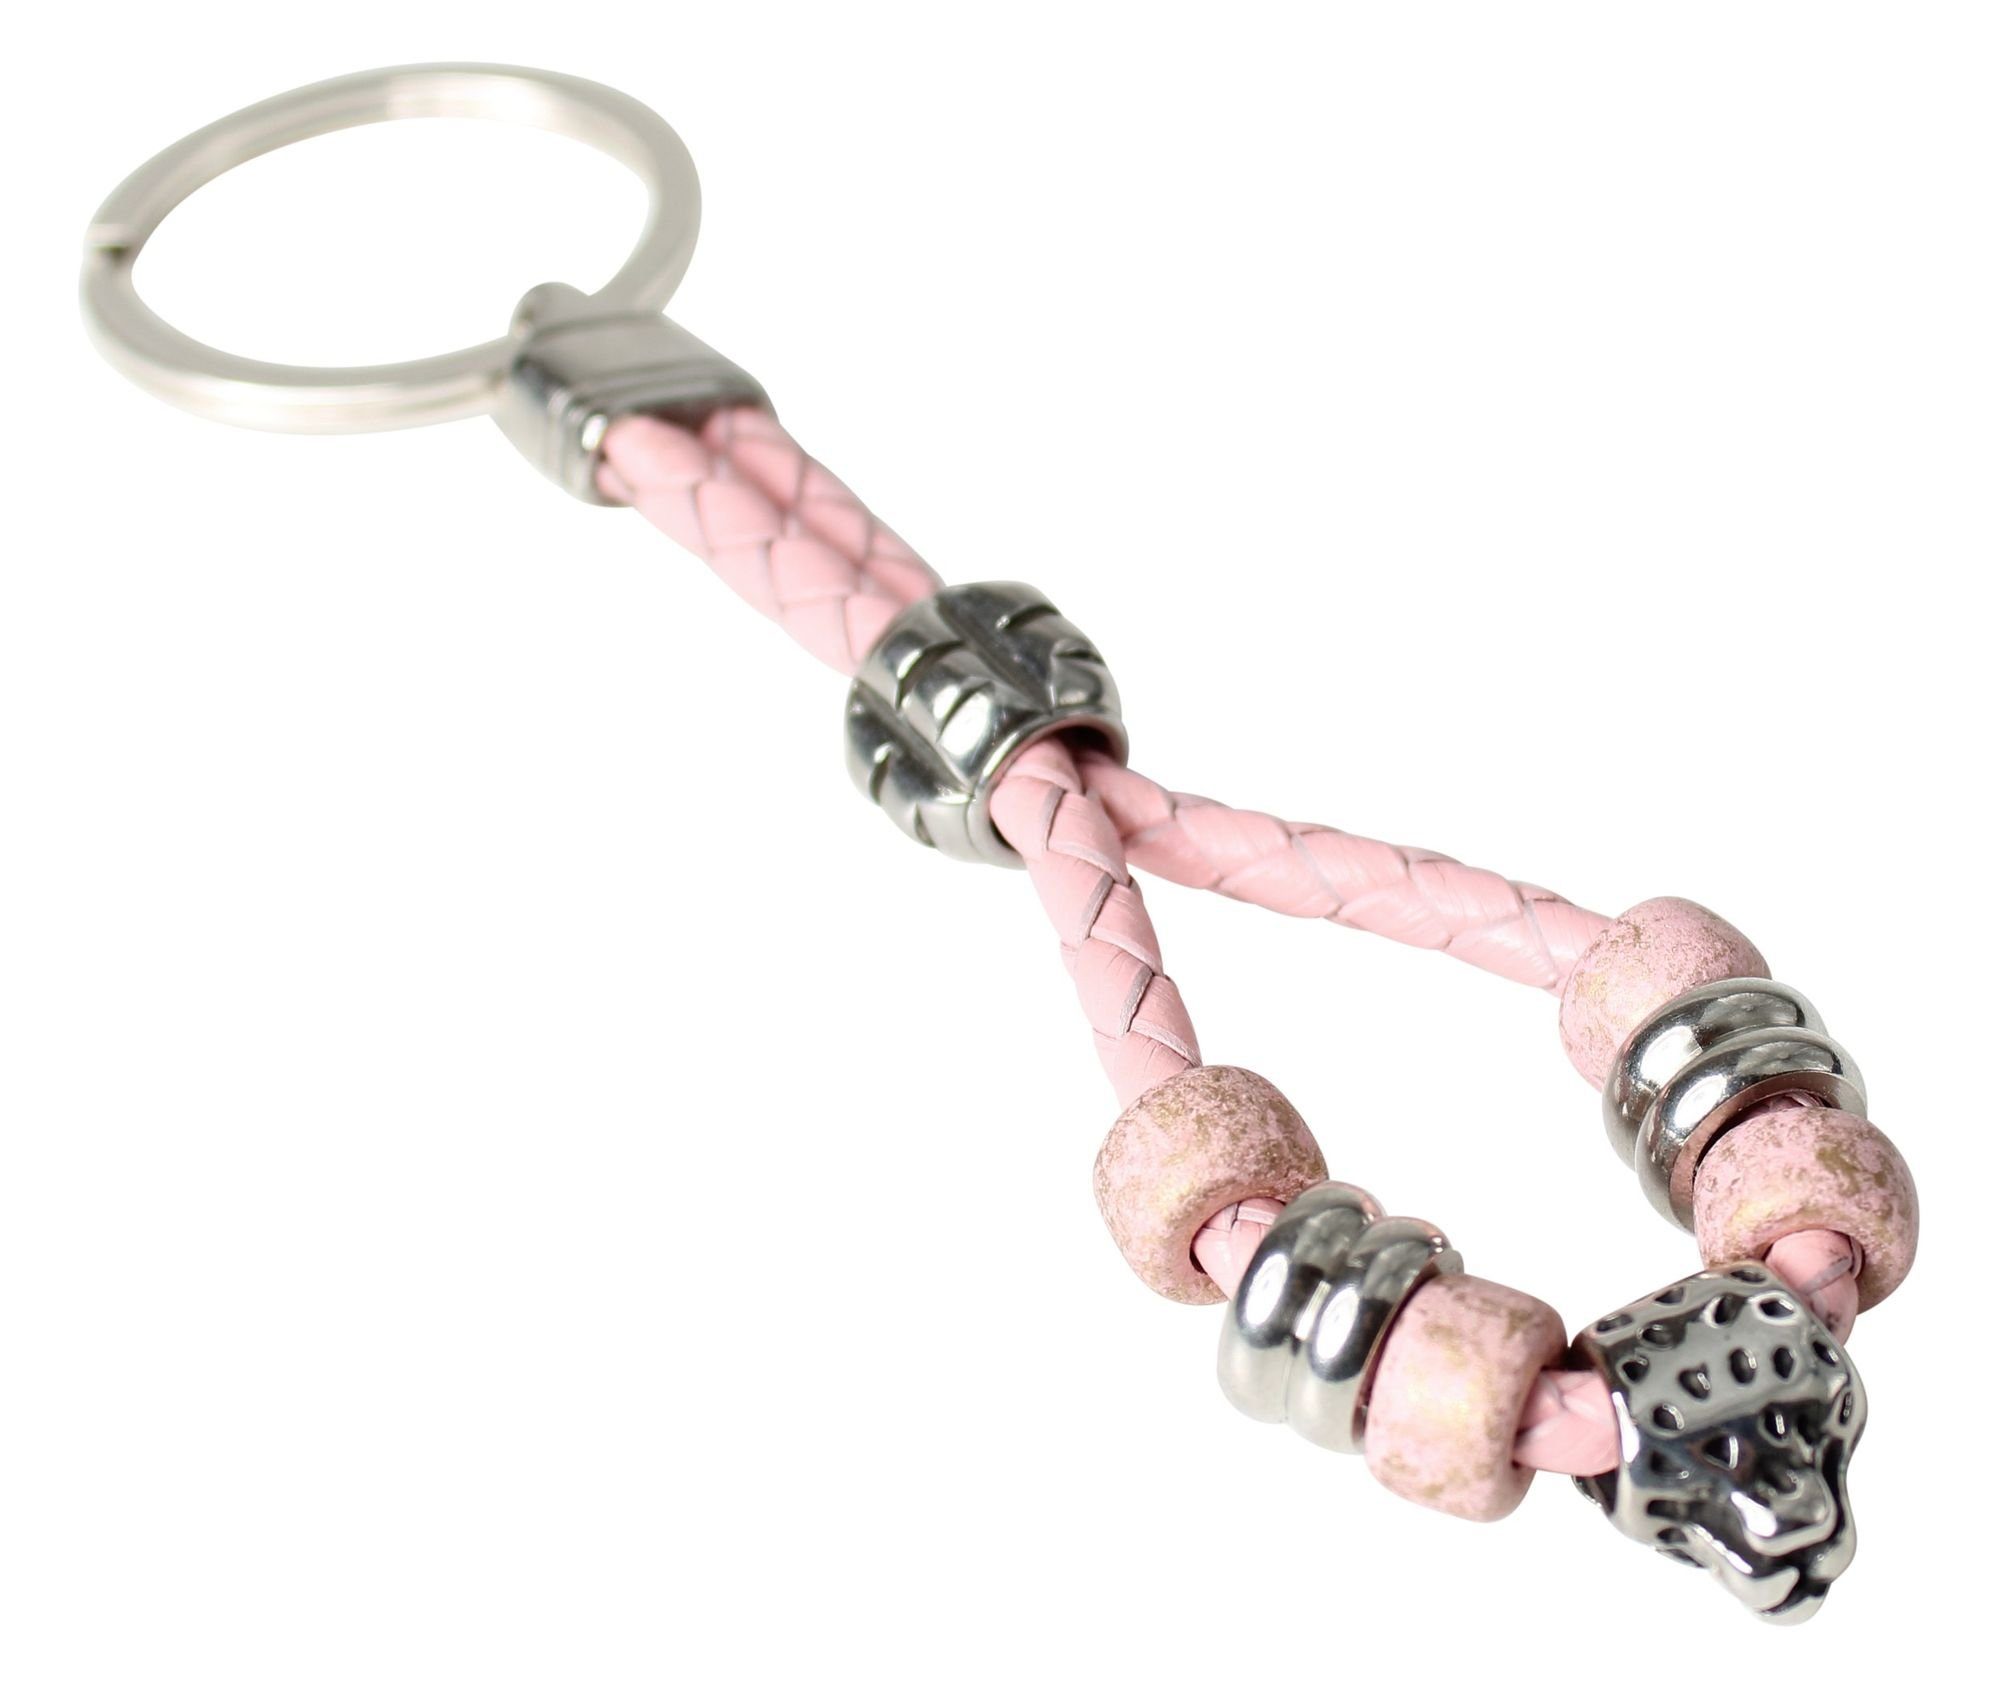 Schlüsselanhänger - Totenkopf mit geflochtenem Lederband - Keyring